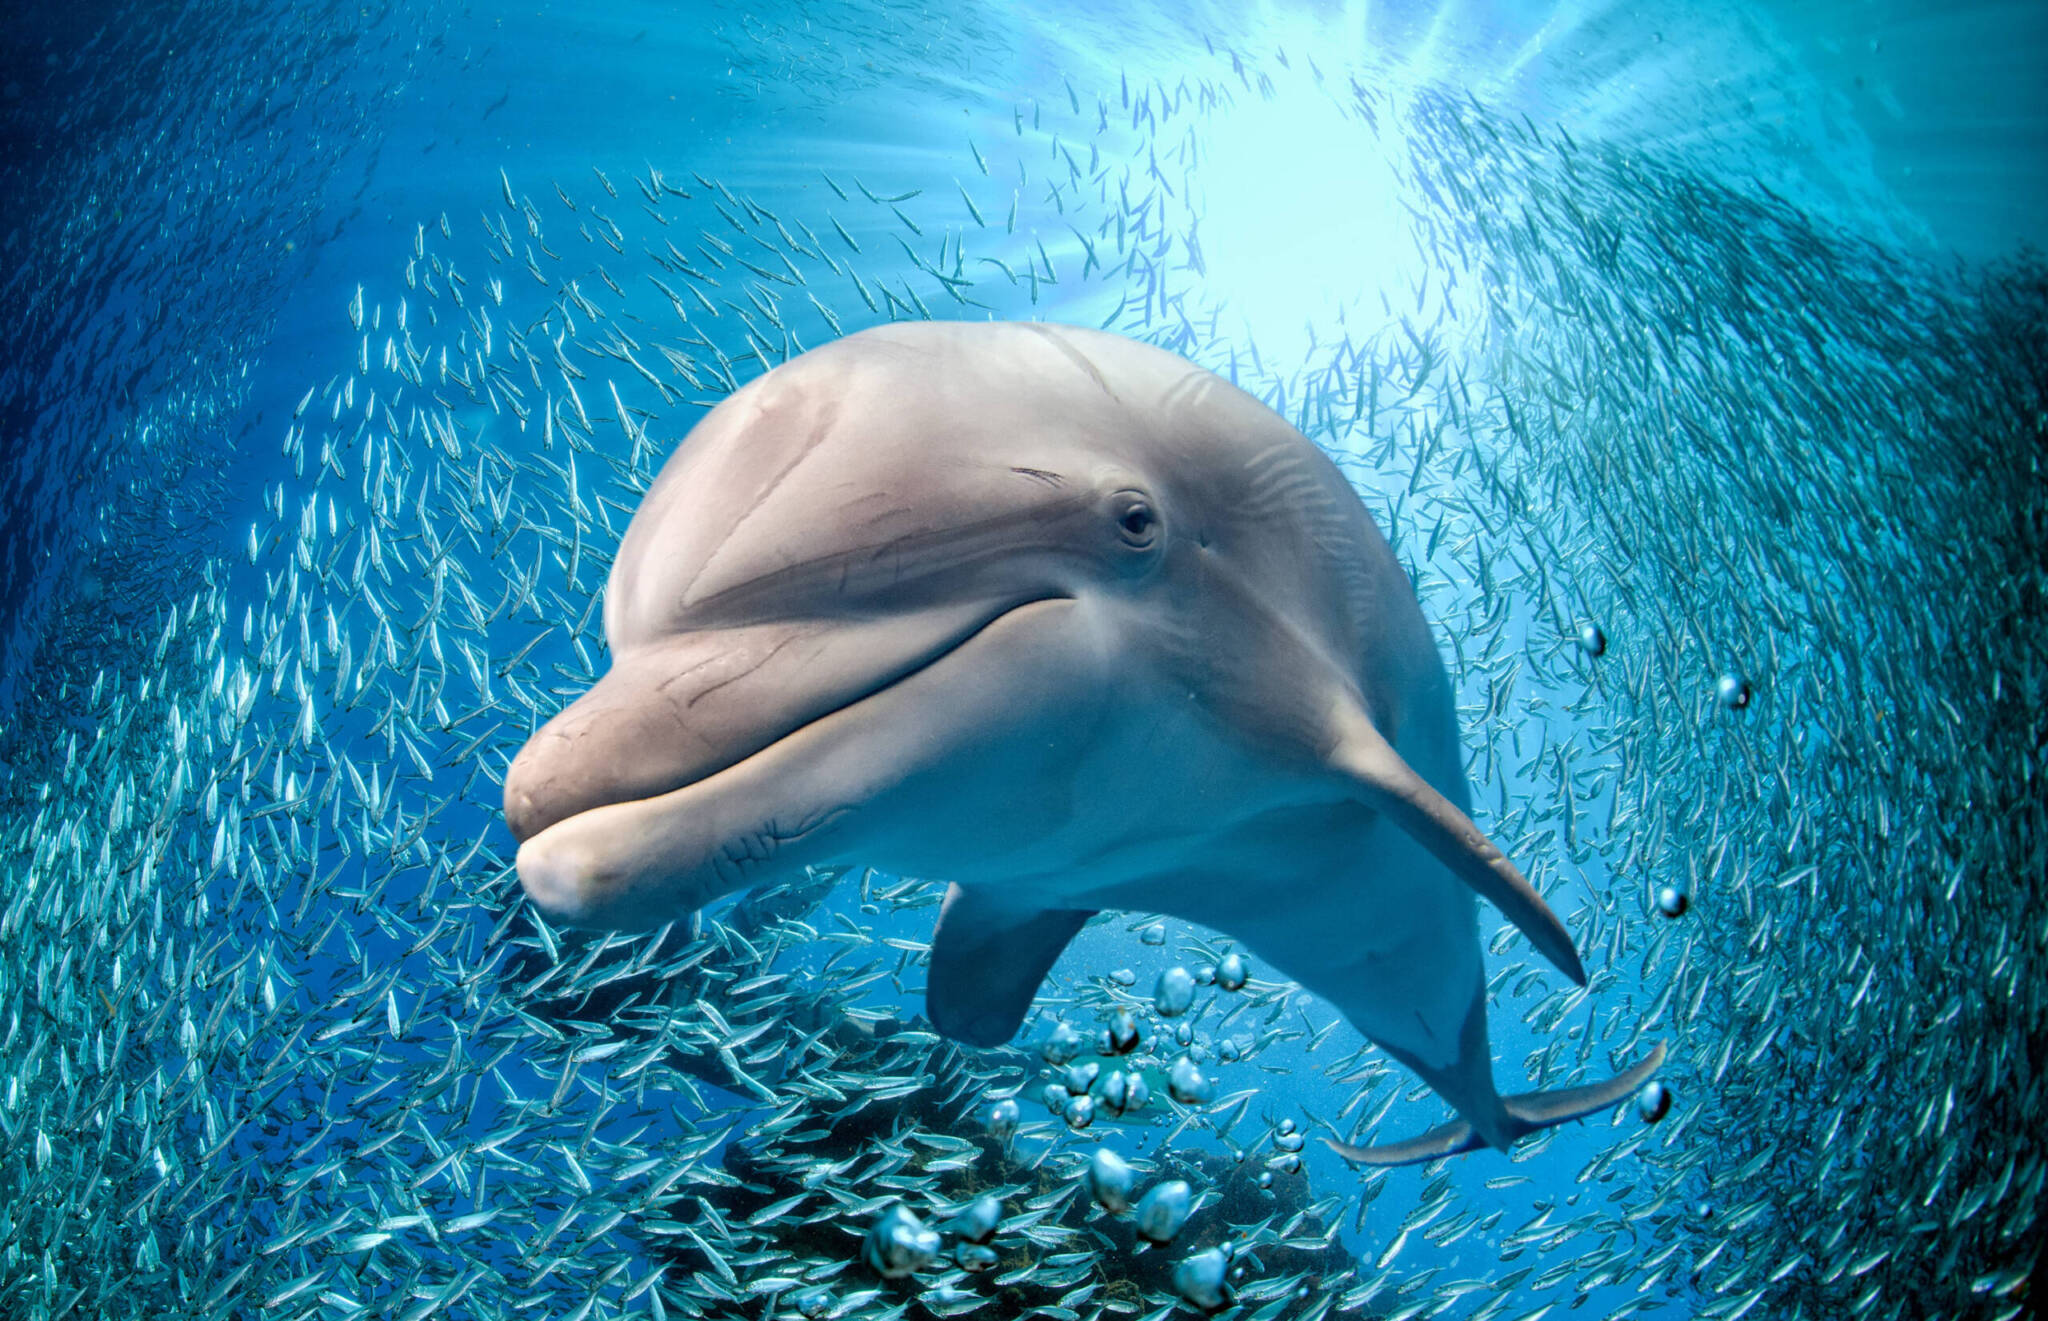 St Augustine Sailing - SailScience - Dolphins - Aquatic Life - Marine Life